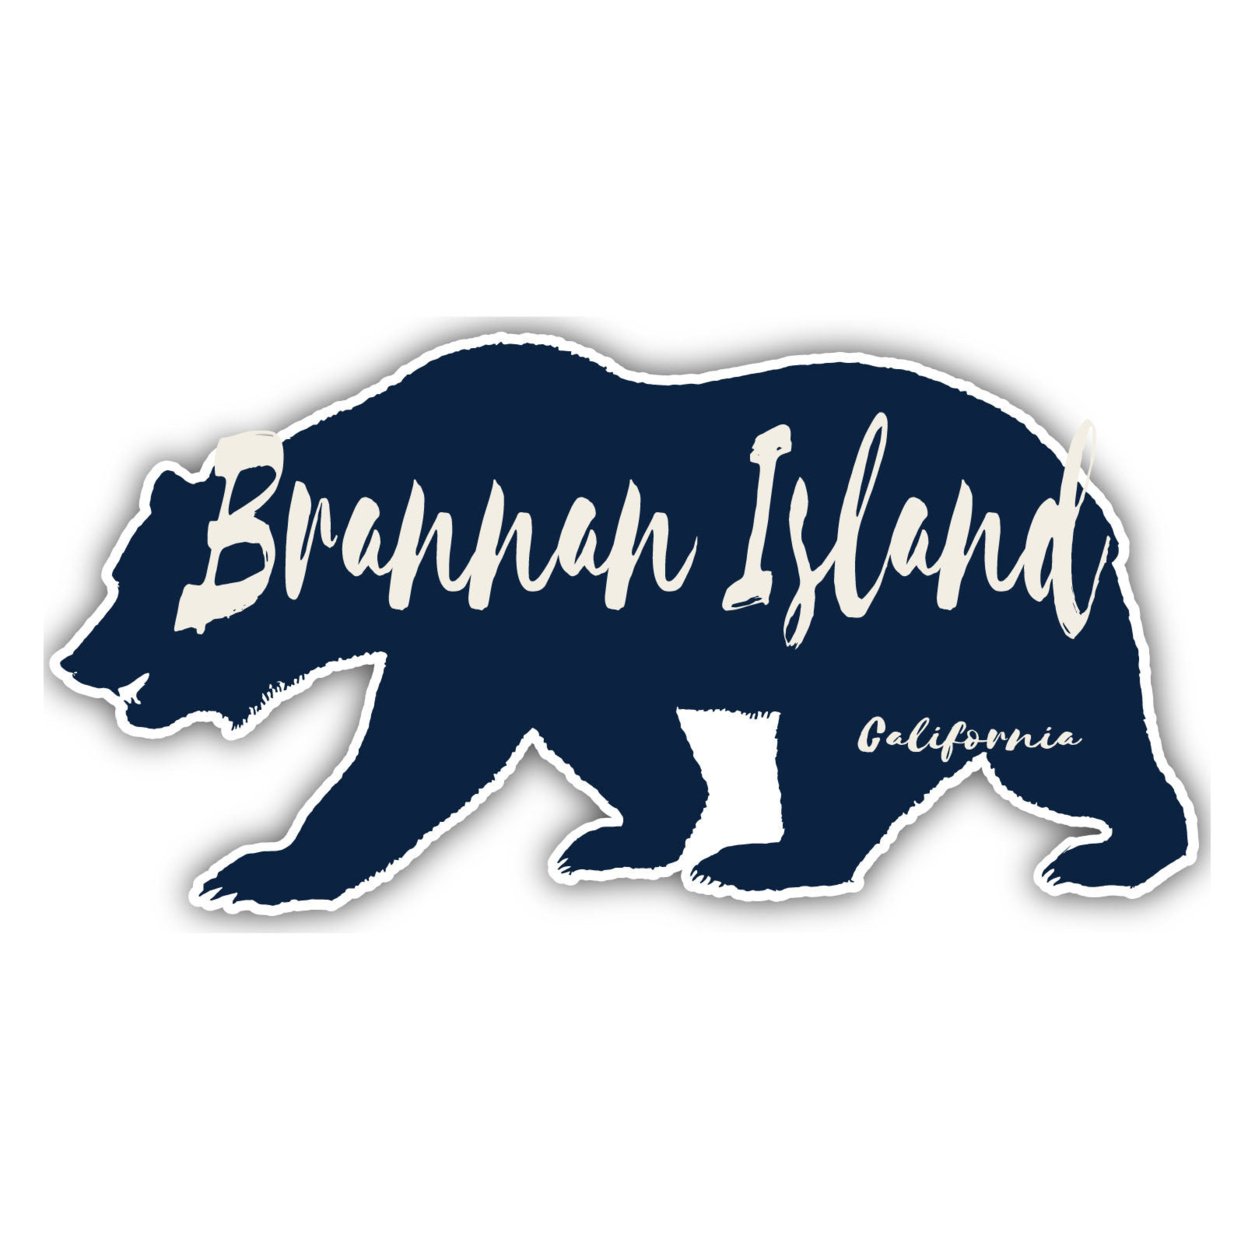 Brannan Island California Souvenir Decorative Stickers (Choose Theme And Size) - Single Unit, 6-Inch, Bear